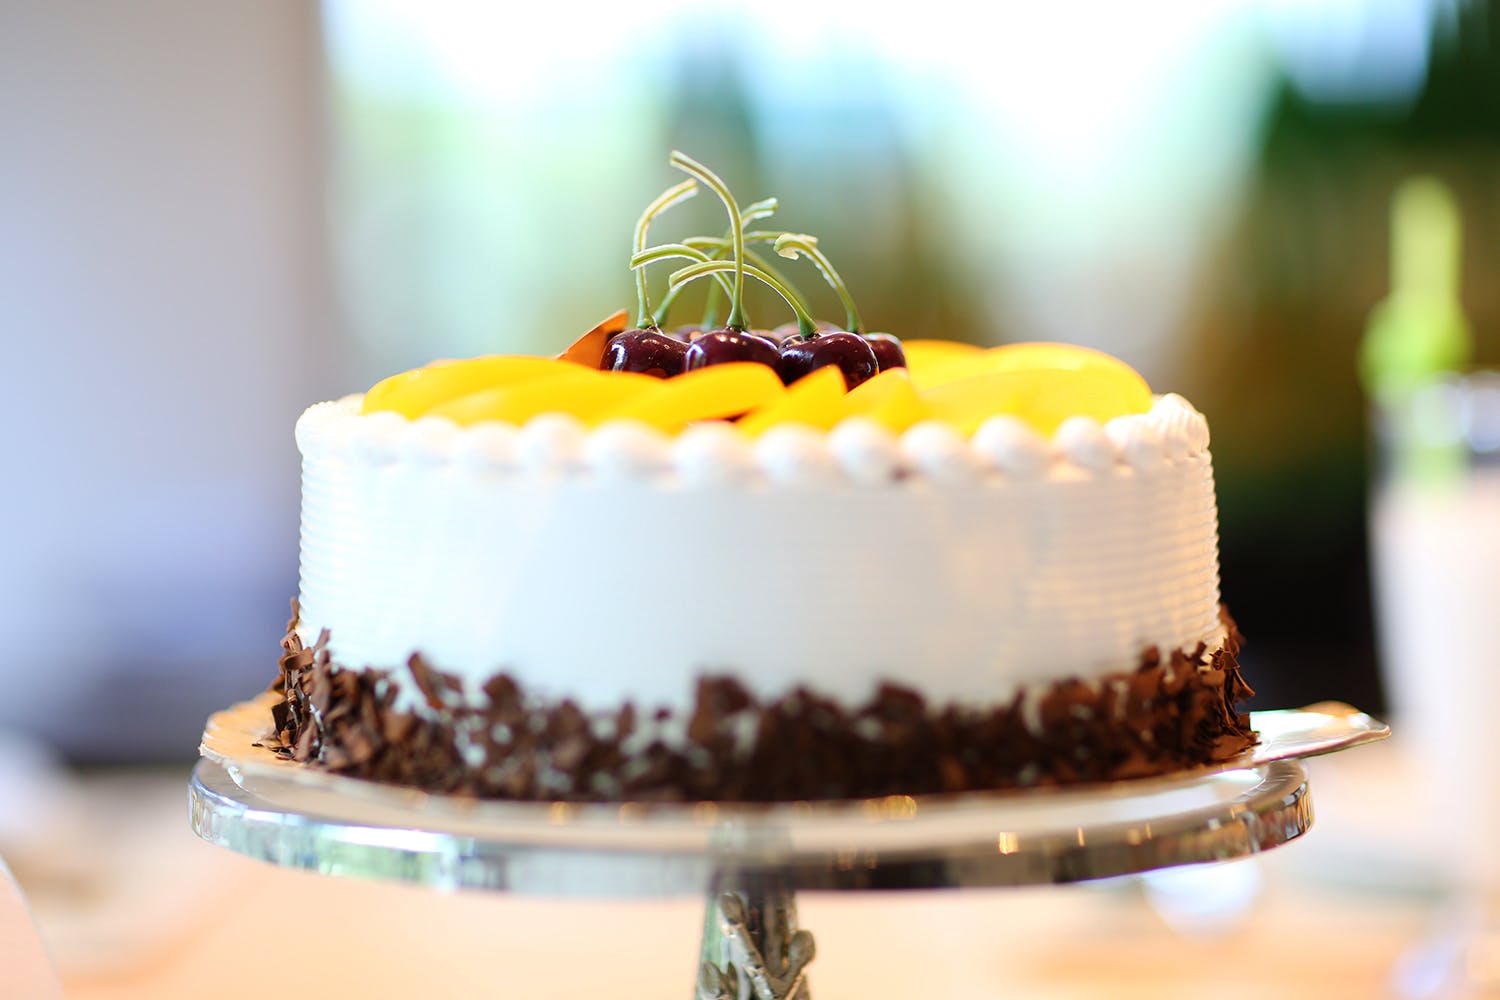 Special Wedding Cake- Order Online Special Wedding Cake @ Flavoursguru